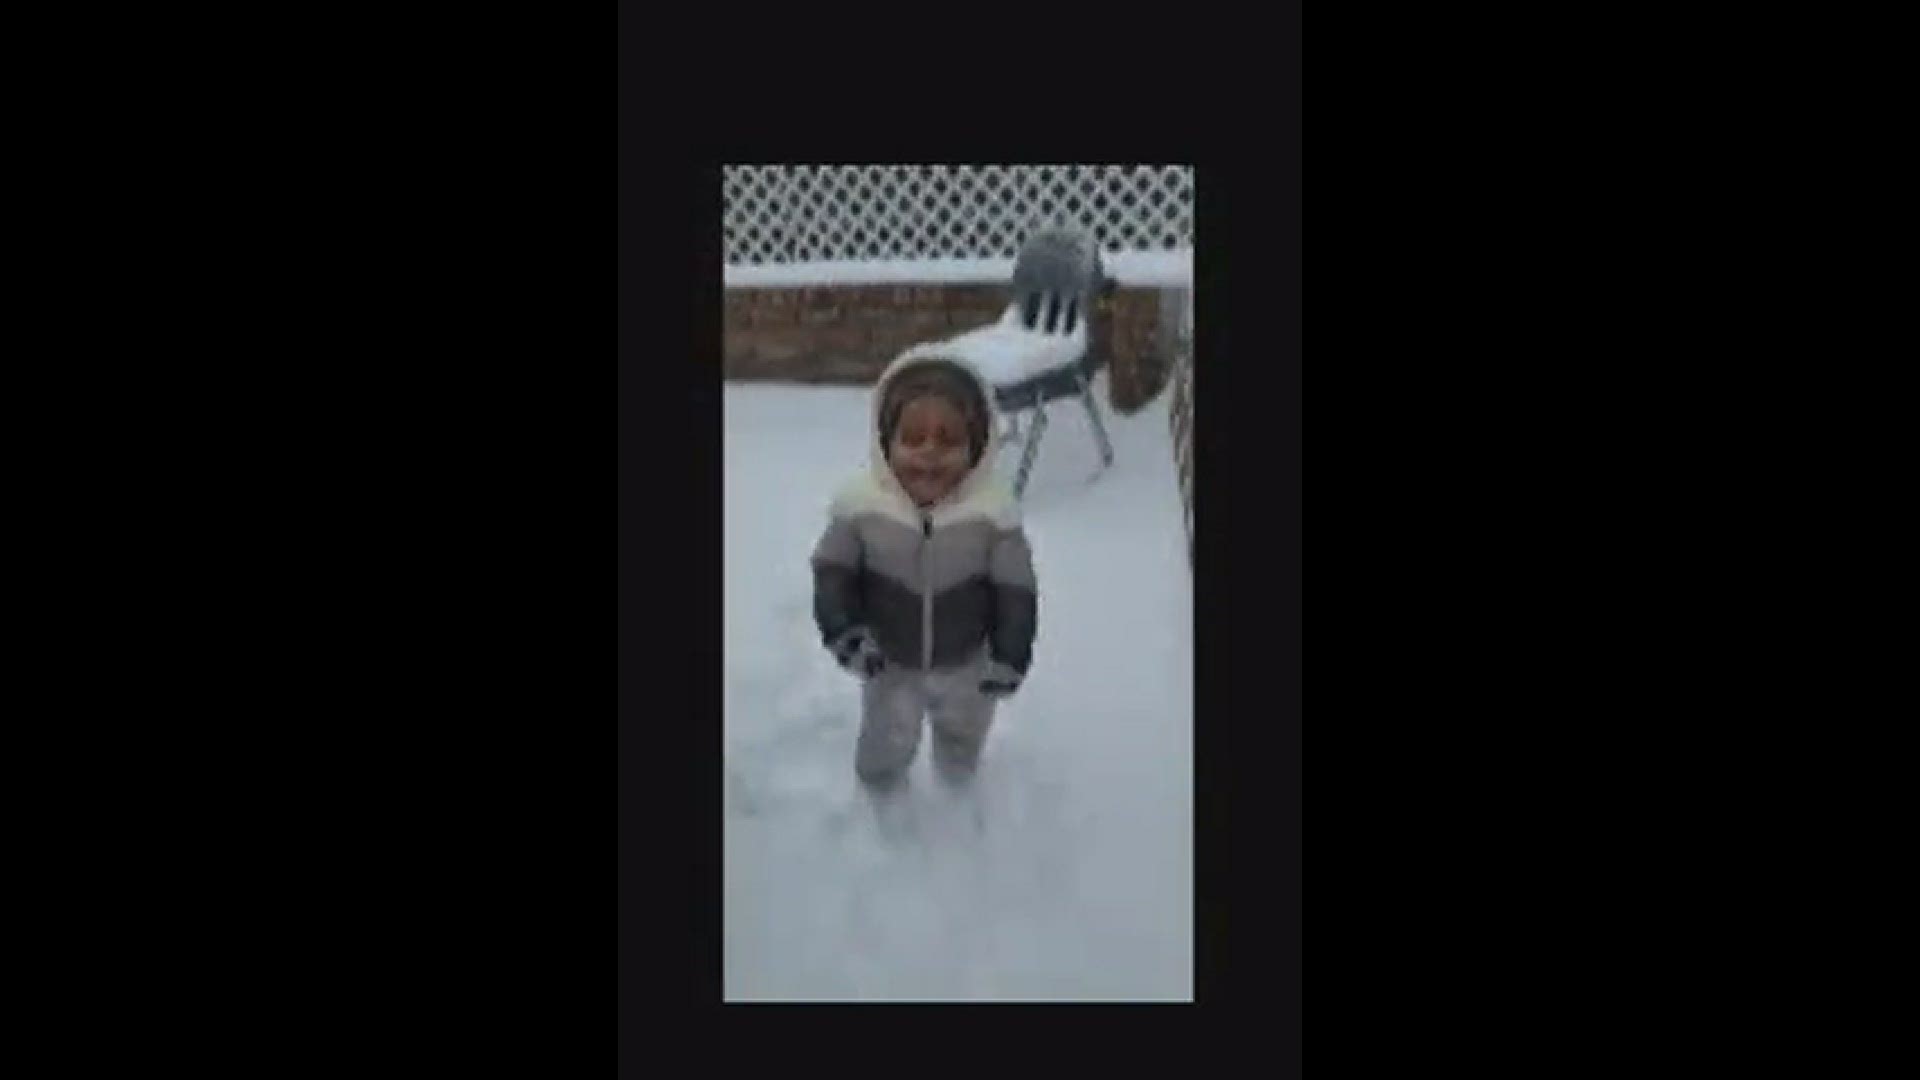 Caiden's  1st Snow - Memphis
Credit: Grandmother Lana Harris Banks